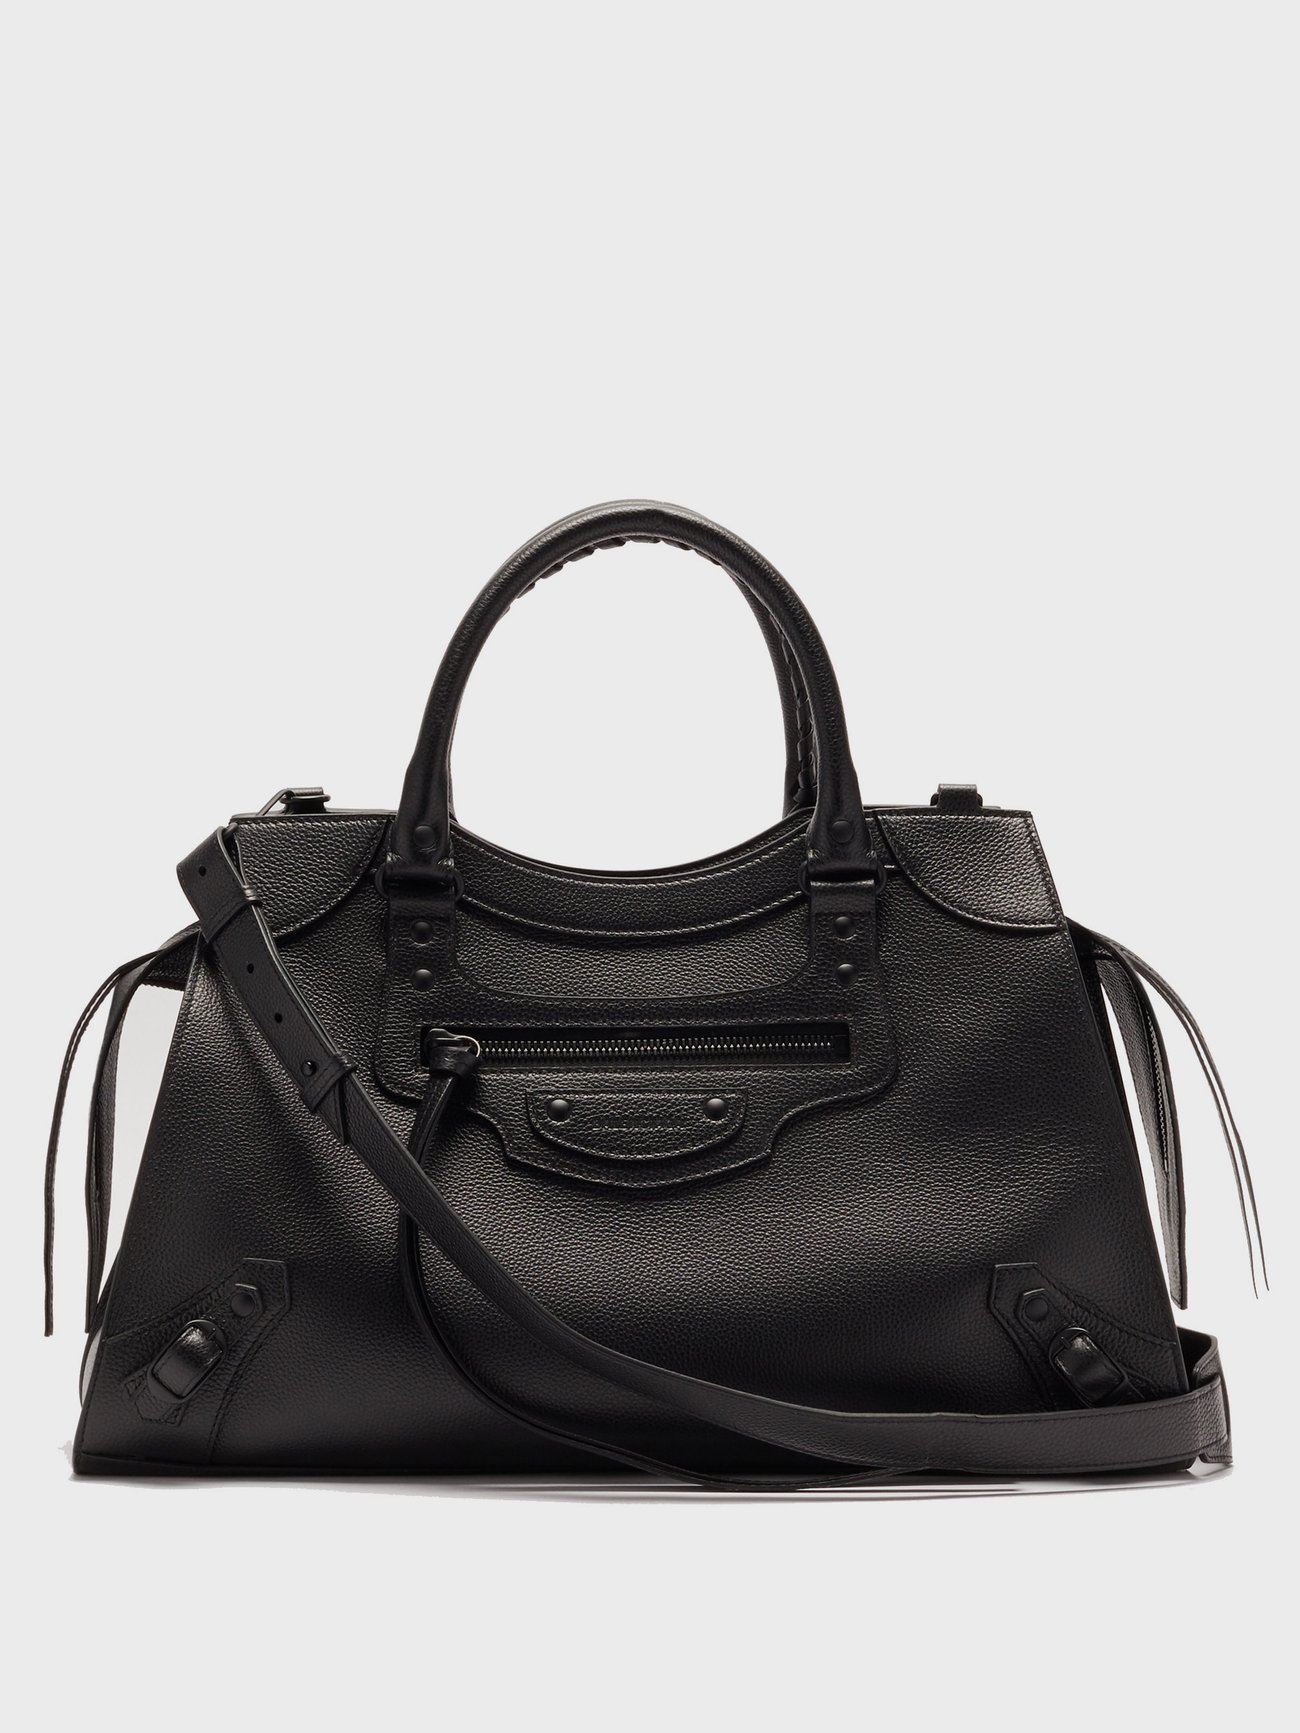 Black Neo Classic City medium bag | Balenciaga | MATCHESFASHION